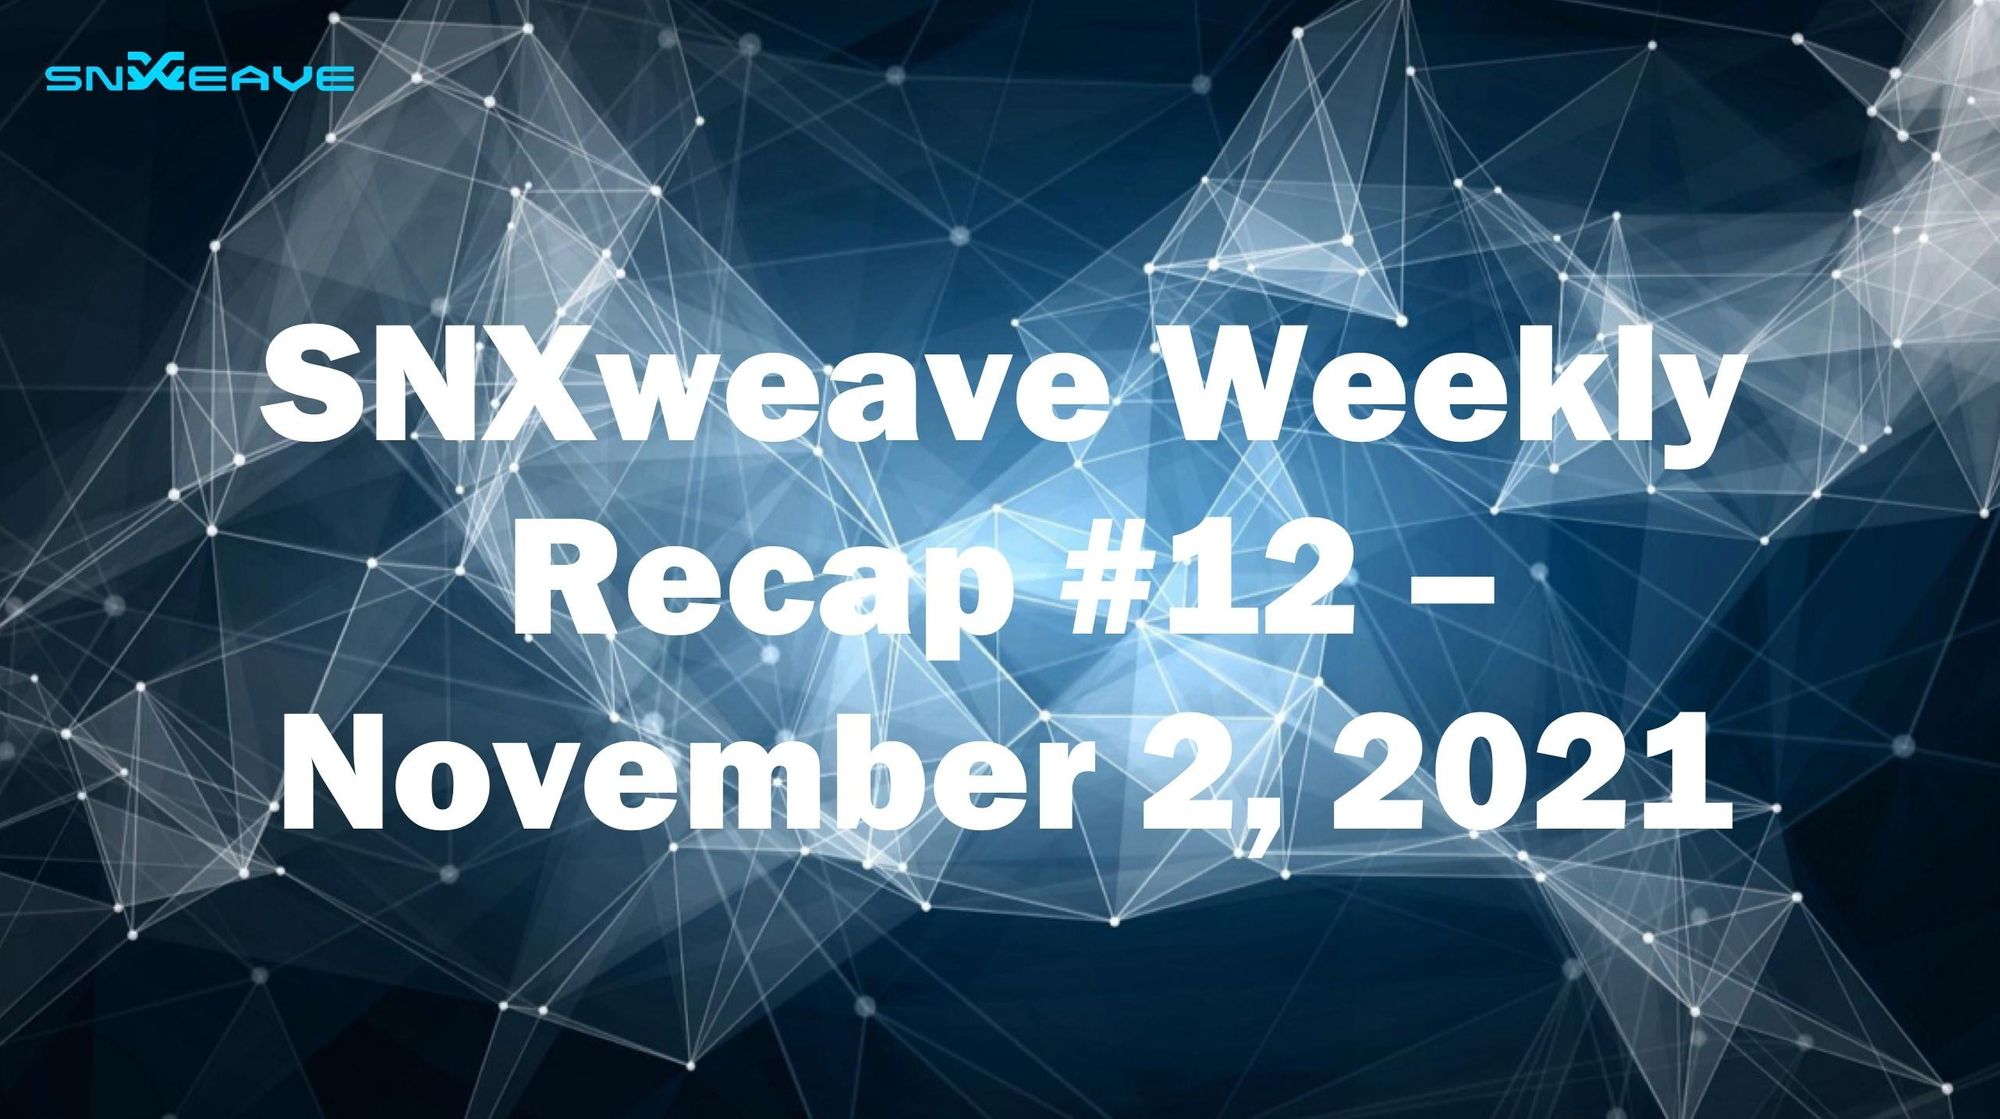 SNXweave Weekly Recap 12